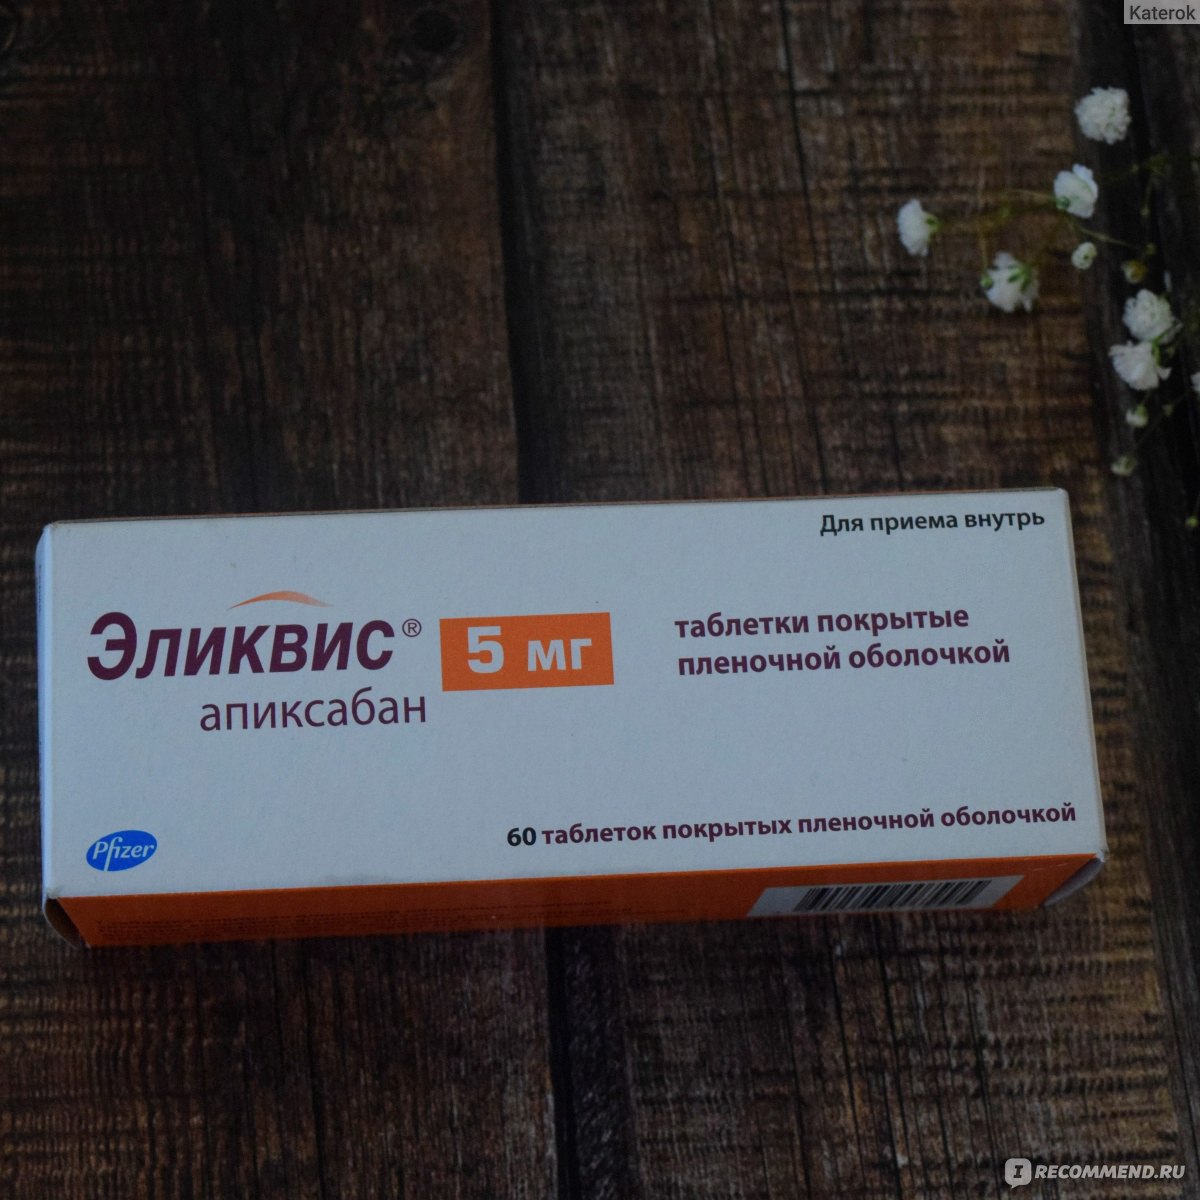 Антикоагулянт Pfizer Эликвис апиксабан 5 мг - «Таблетки Эликвис .